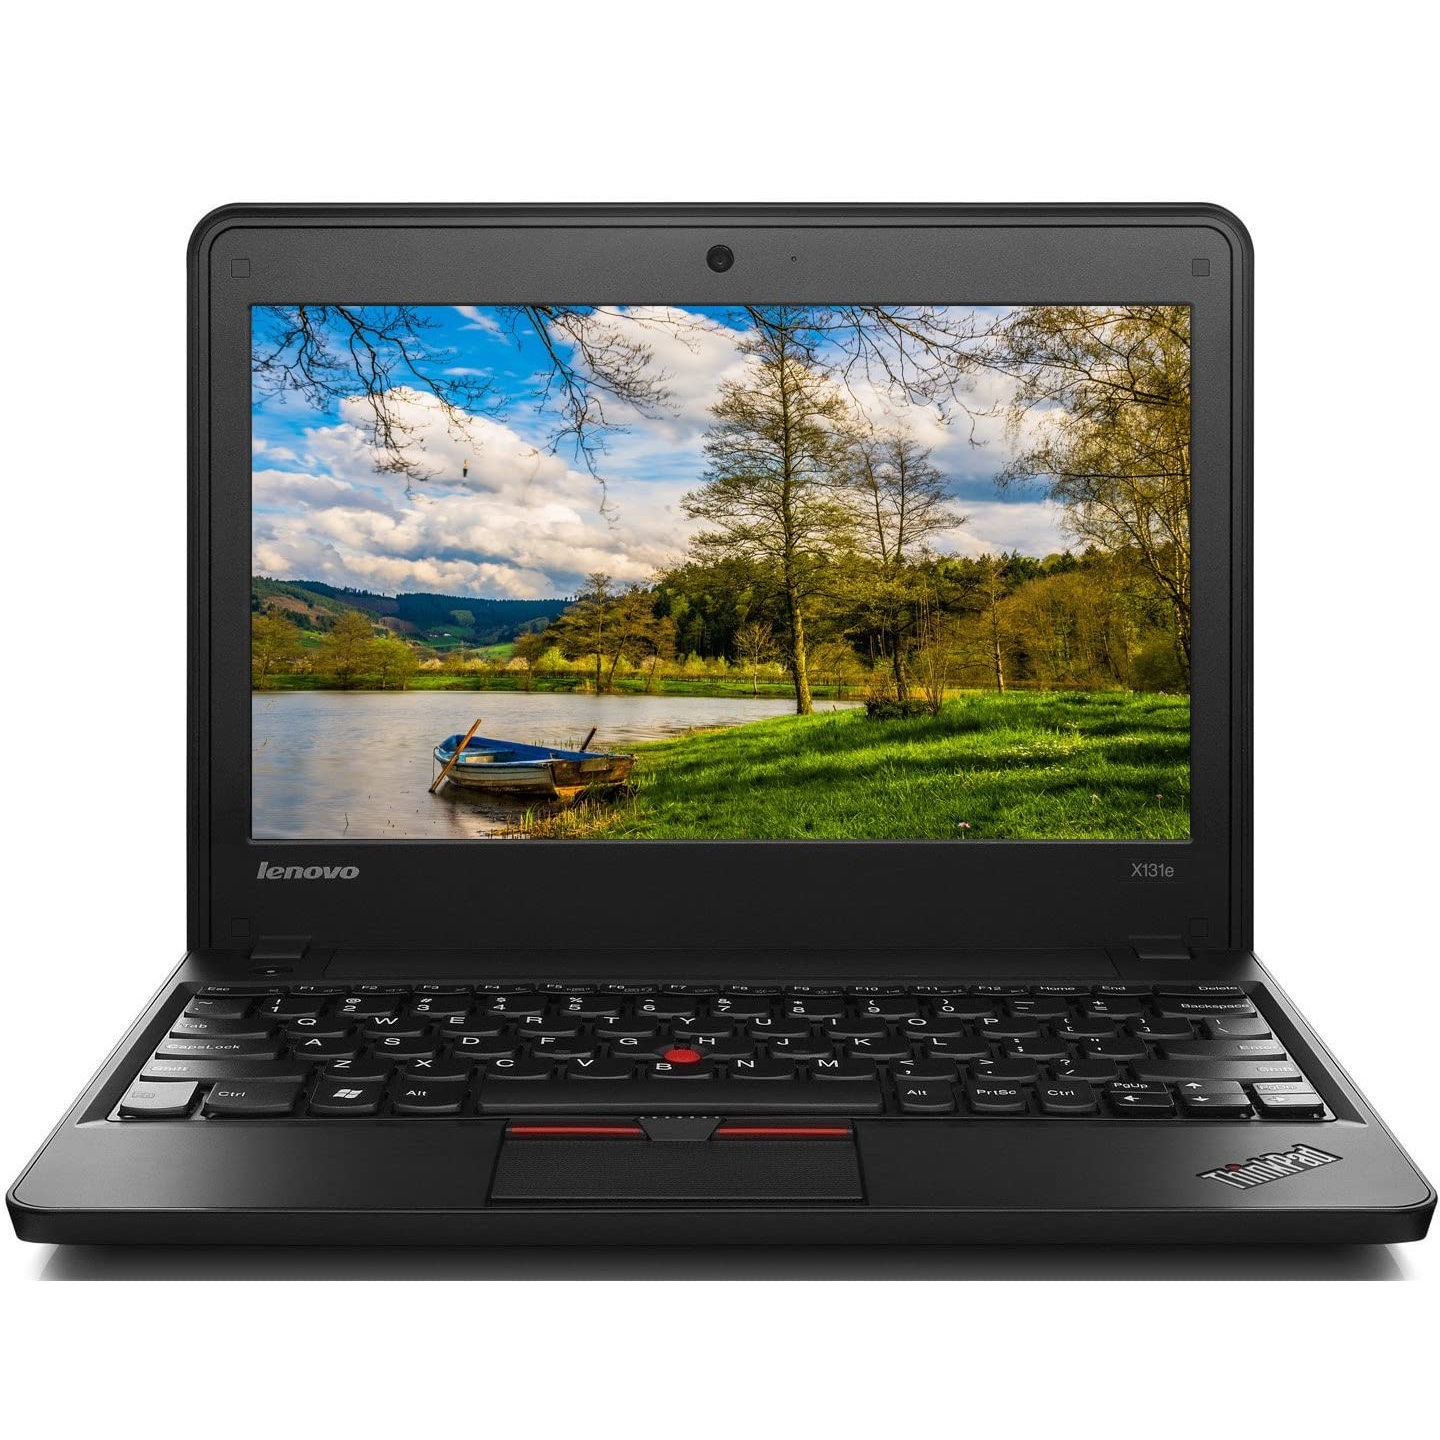 Lenovo ThinkPad X131E 11.6in Laptop, AMD E2-1800, 4GB DDR3, 320GB SATA, 802.11n, Webcam, HDMI, Windows 10 (Renewed)-Multi-Language Support English/Spanish - Technohub Digital Solutions